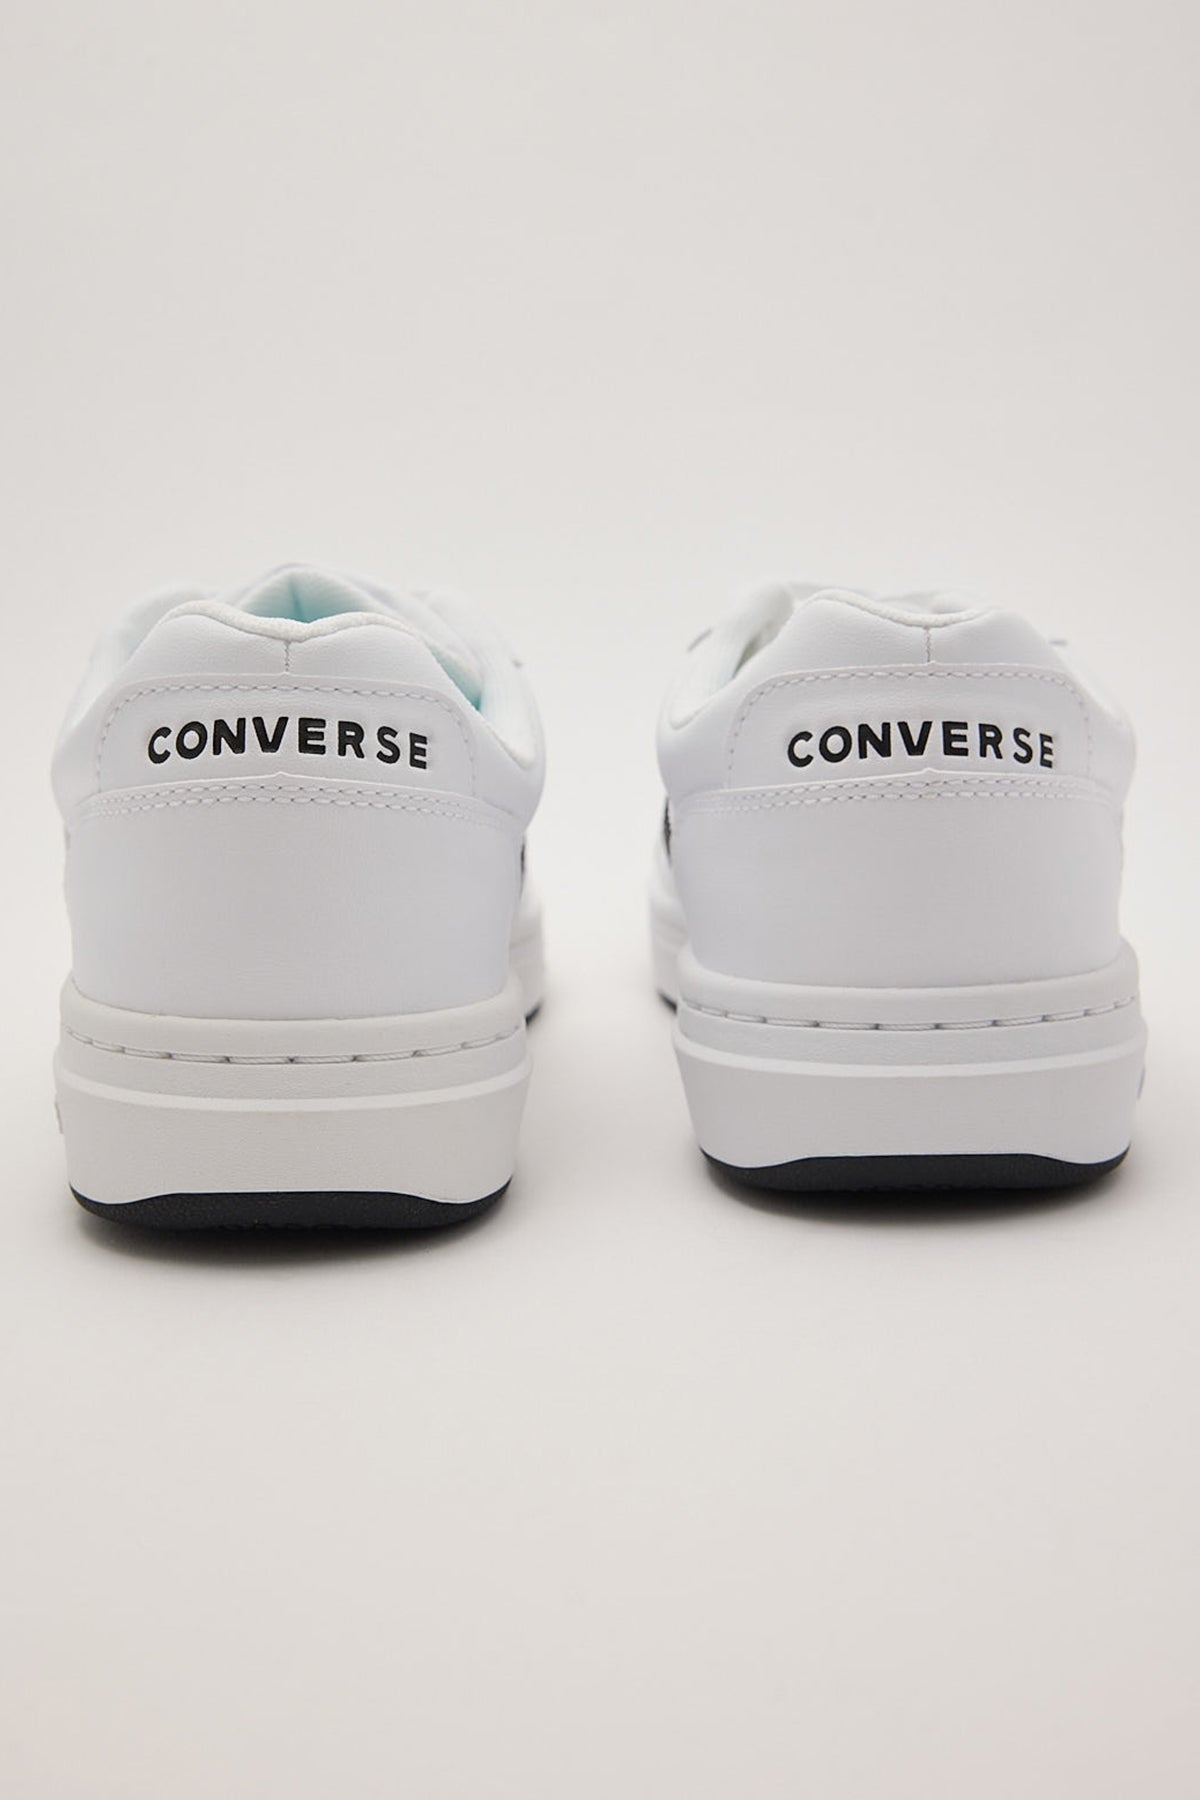 Converse Pro Blaze V2 Ox White